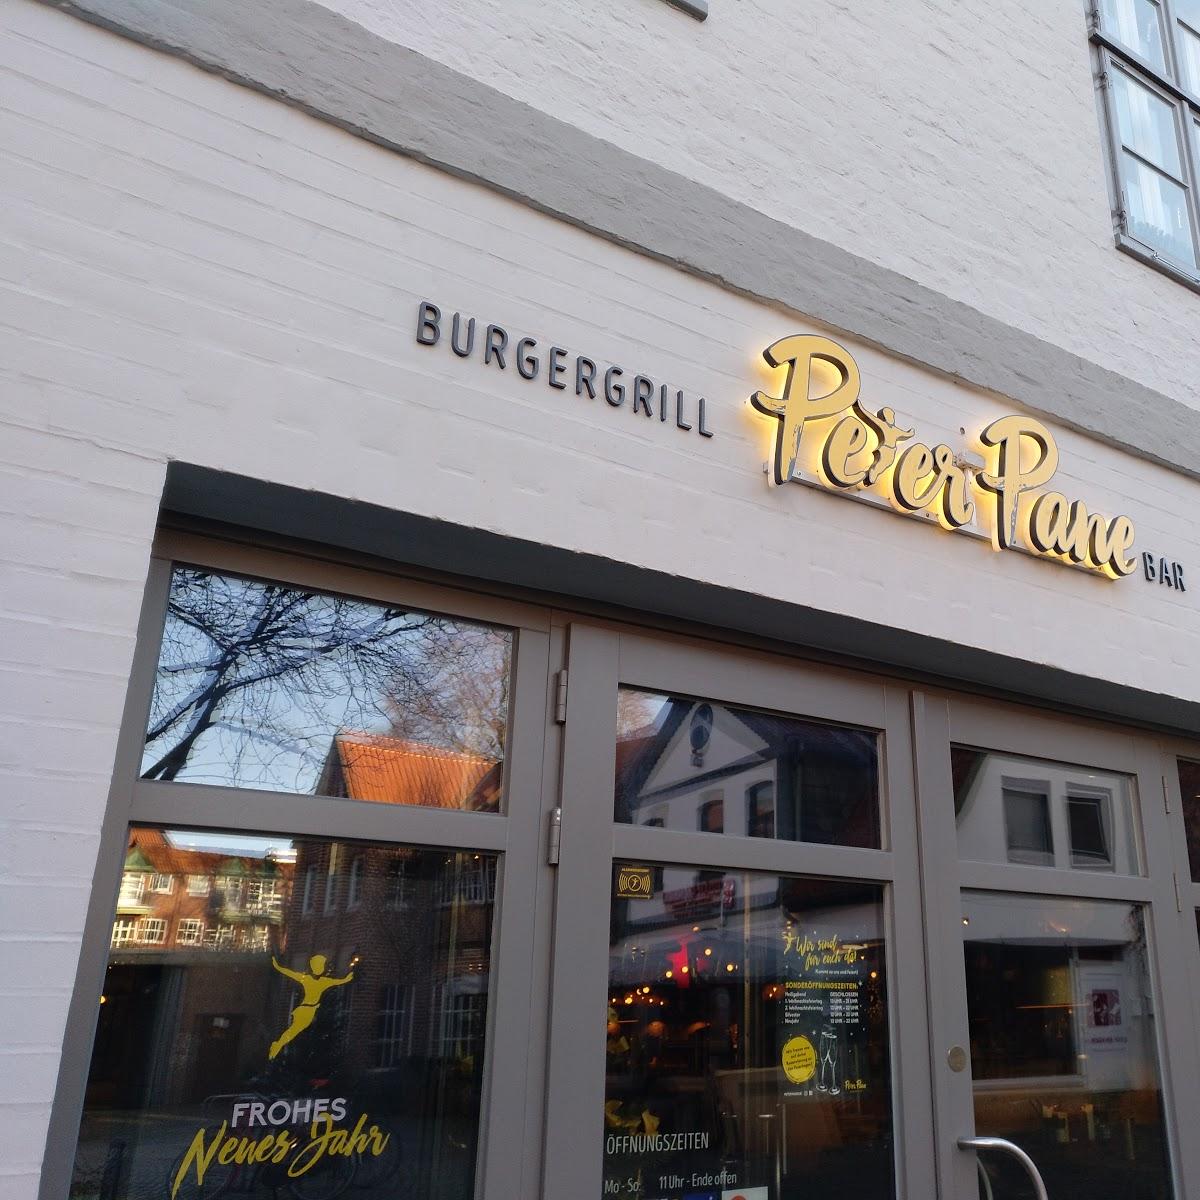 PETER PANE Lüneburg Burgergrill & Bar